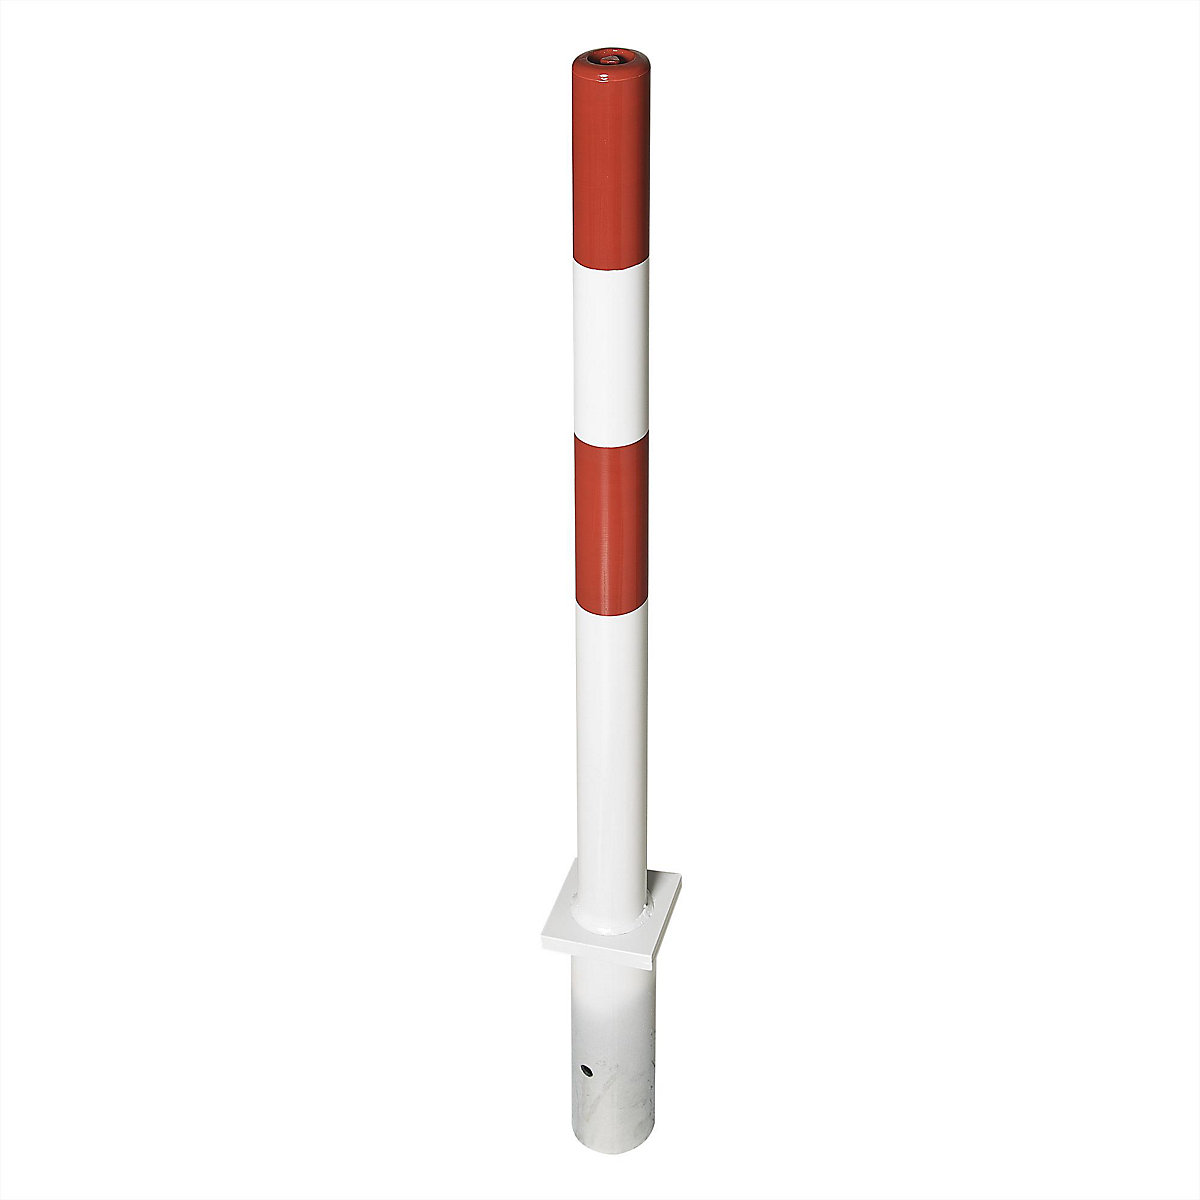 Zaporni stebrič iz jekla, za vbetoniranje, Ø 76 mm, rdeče-bele barve, 1 ušesce za verigo-5